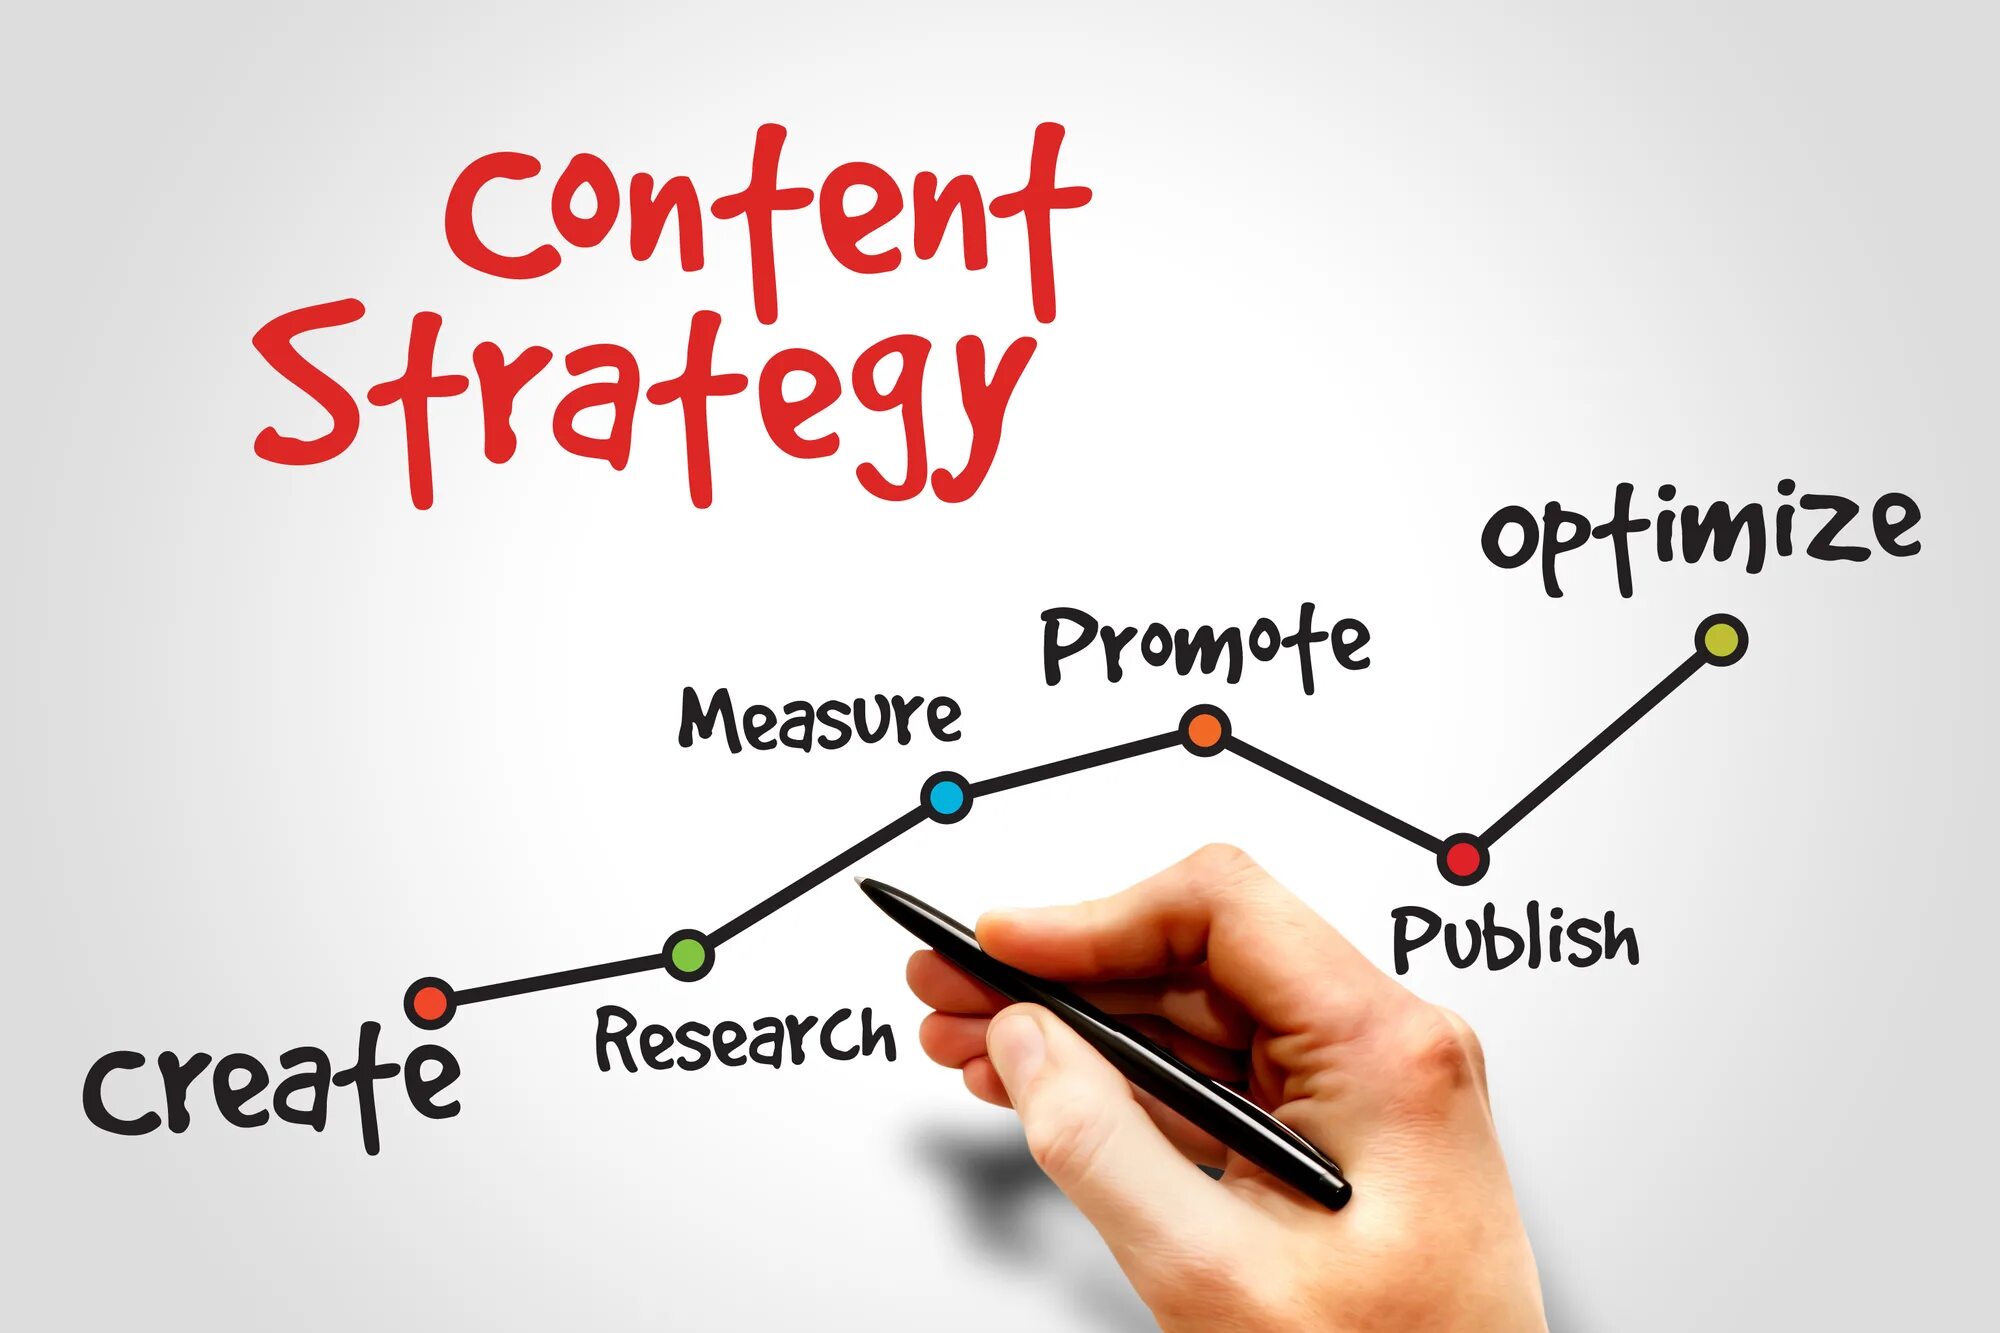 Content htm. Маркетинг. Контент стратегия. Контент маркетинг. Маркетинговая стратегия картинки.